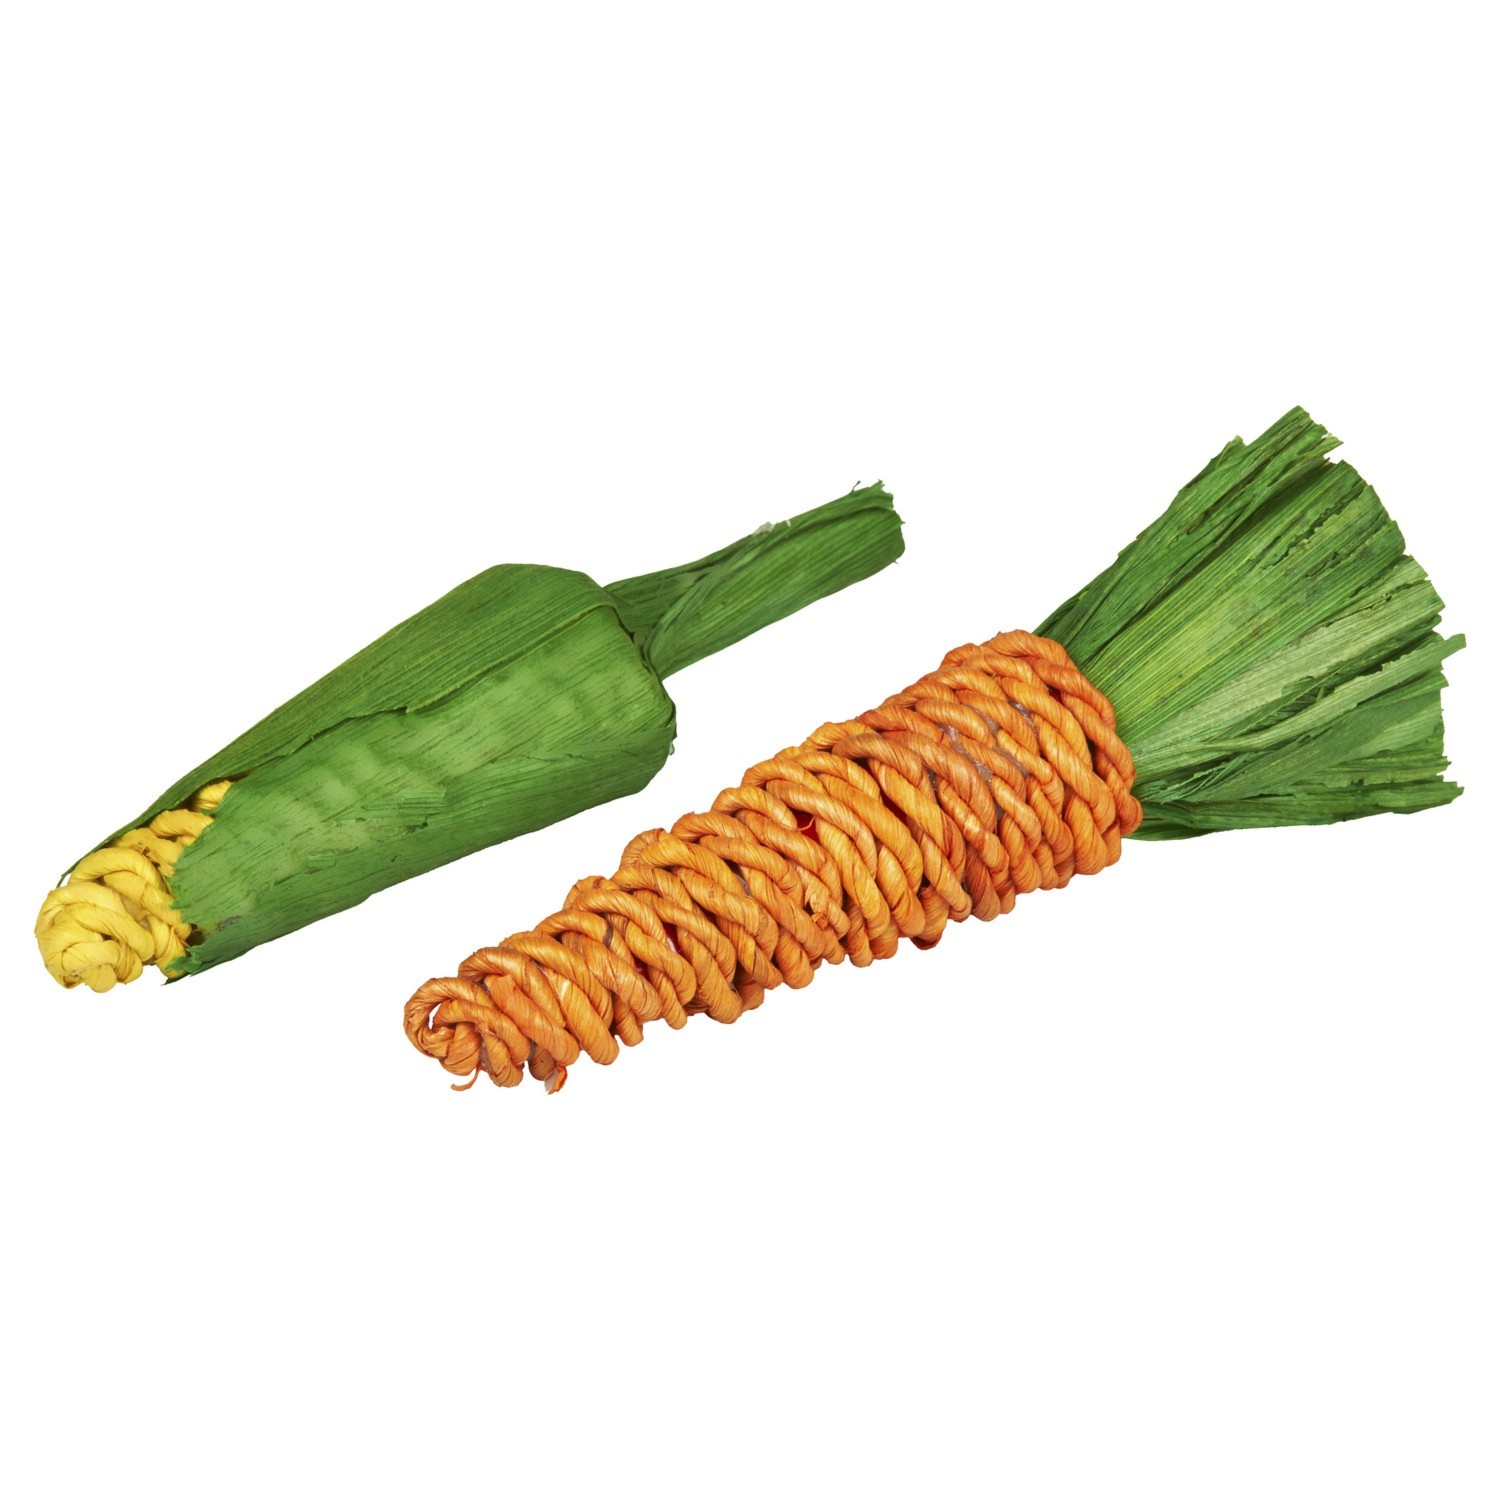 Carrot and Corn Chew Toy - Orange Image